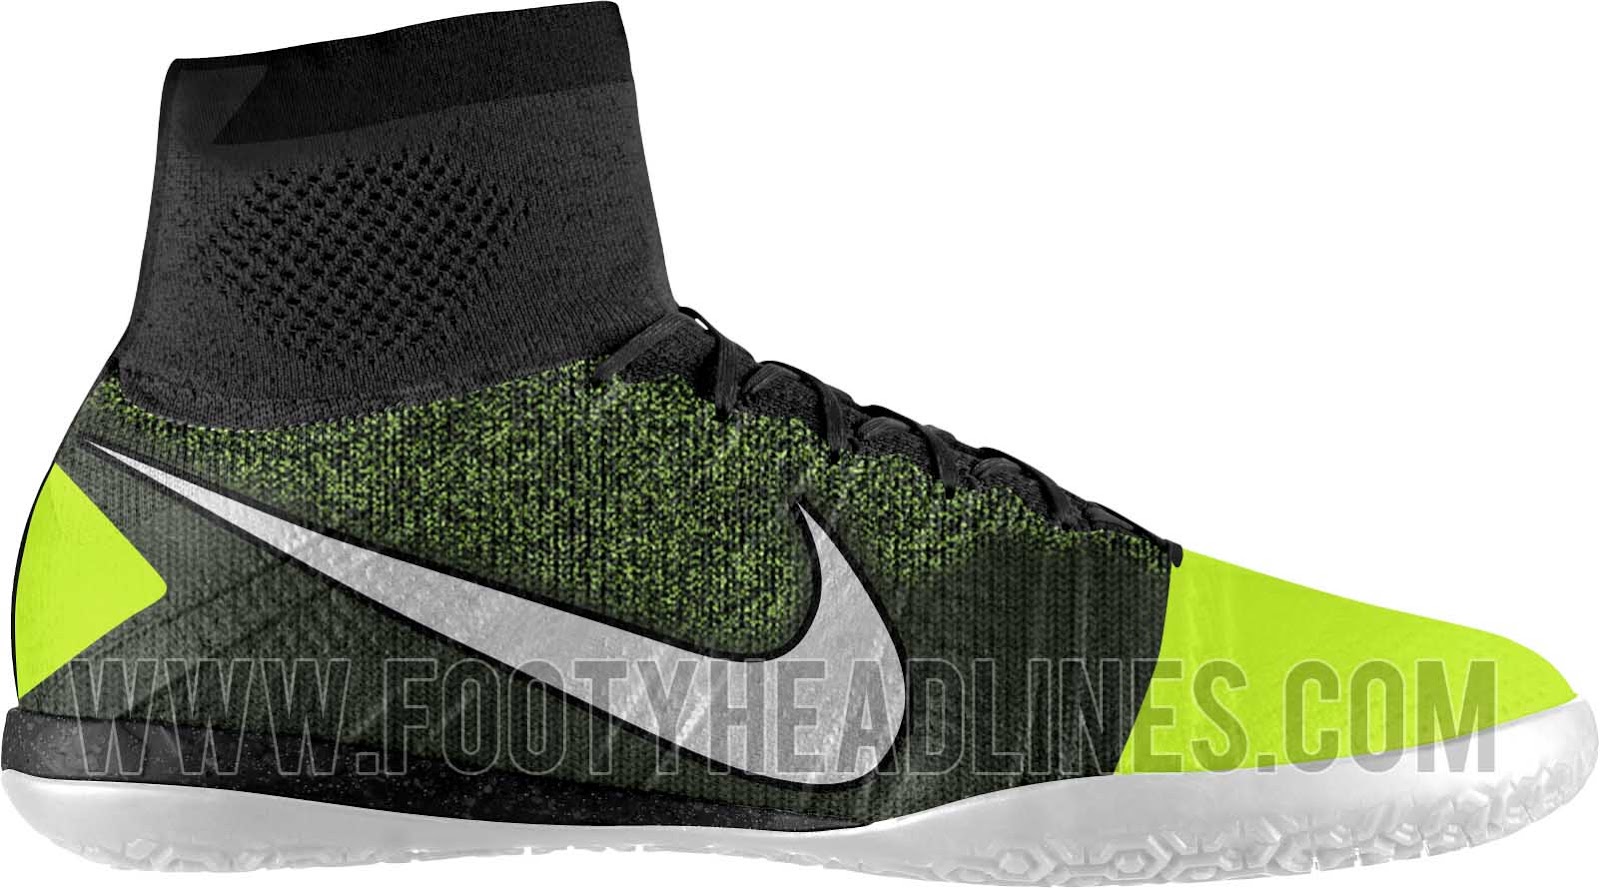 Grey / Volt Nike Elastico Superfly 14-15 Boot Unveiled - Footy Headlines